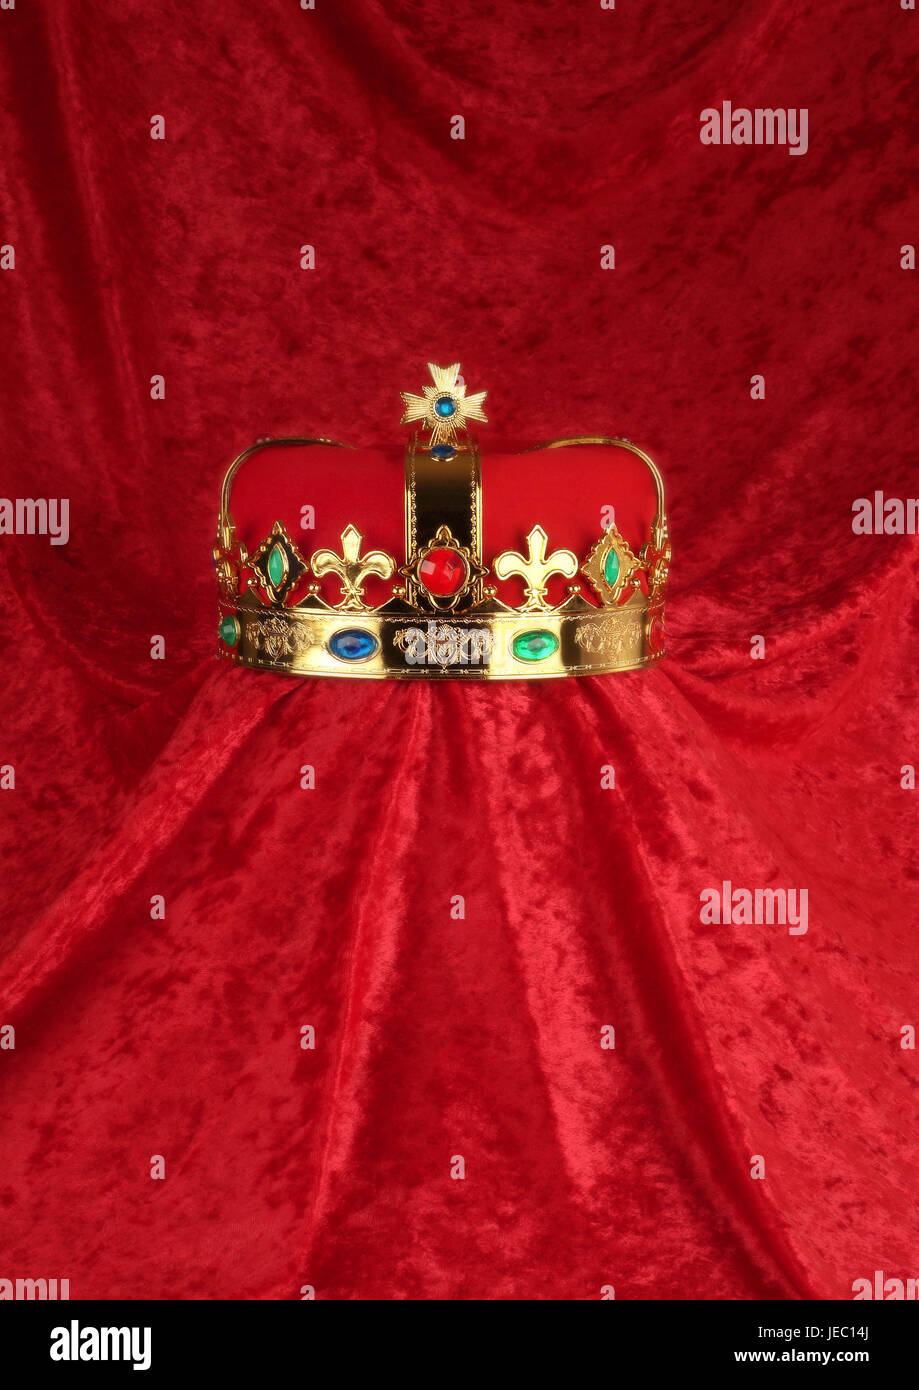 Crown on red velvet Stock Photo - Alamy